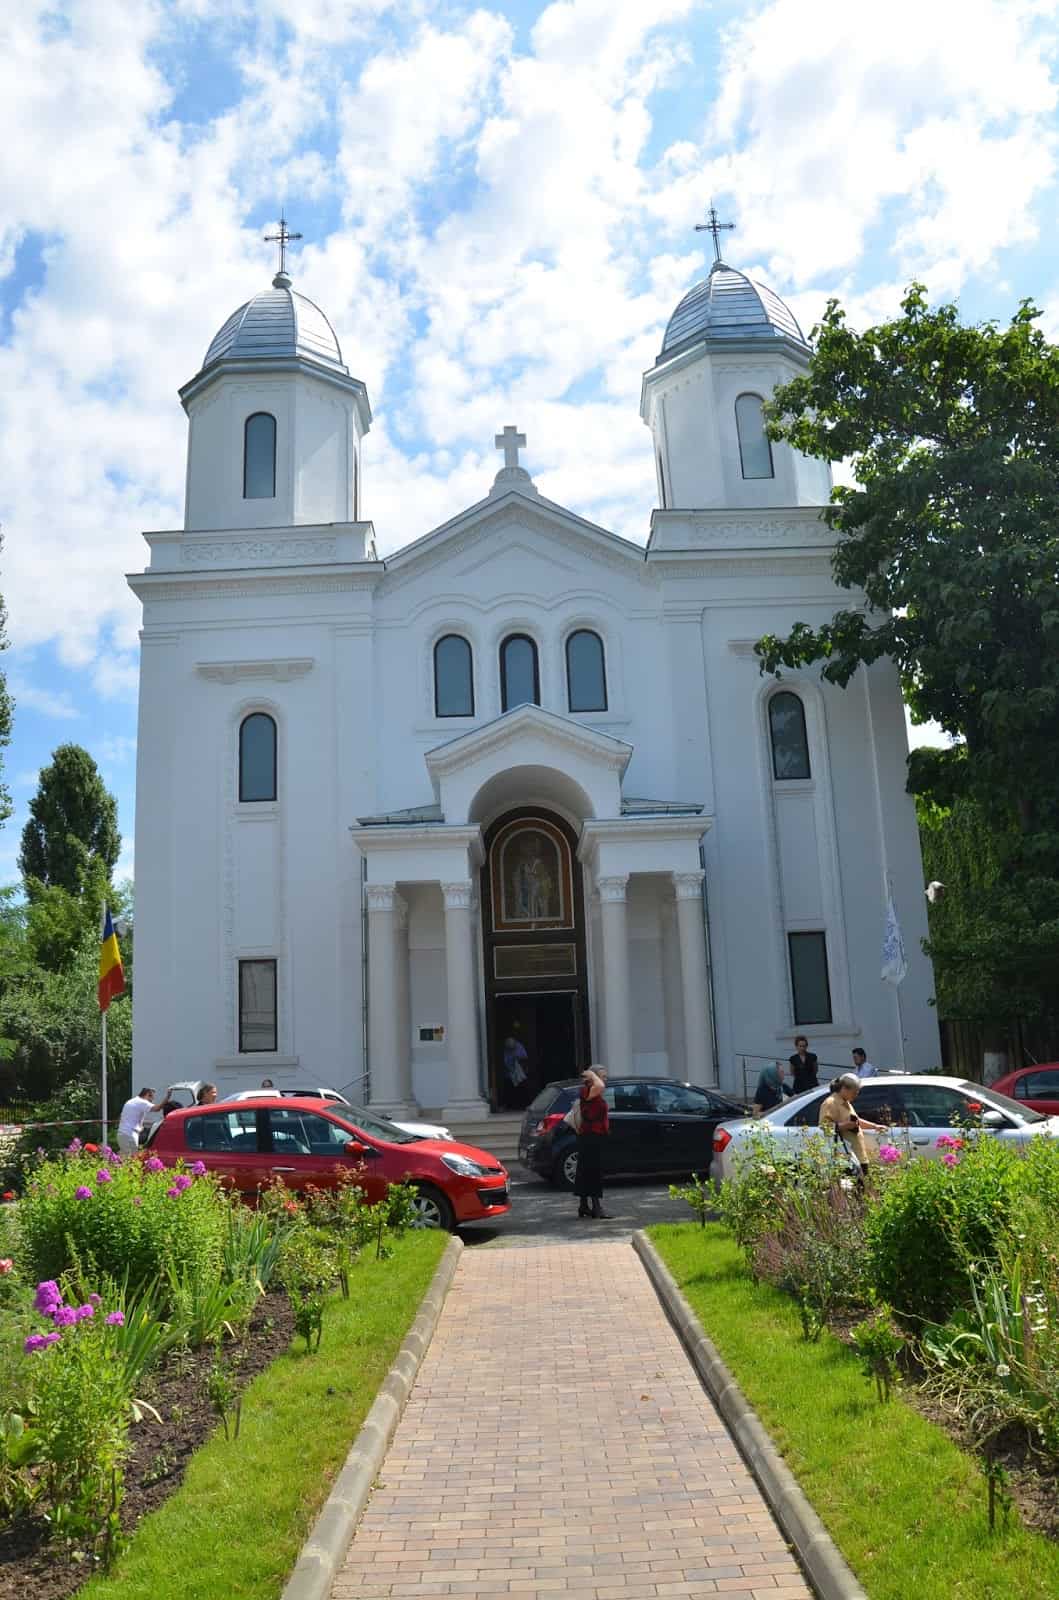 St. Nicholas Tabacu Church in Bucharest, Romania